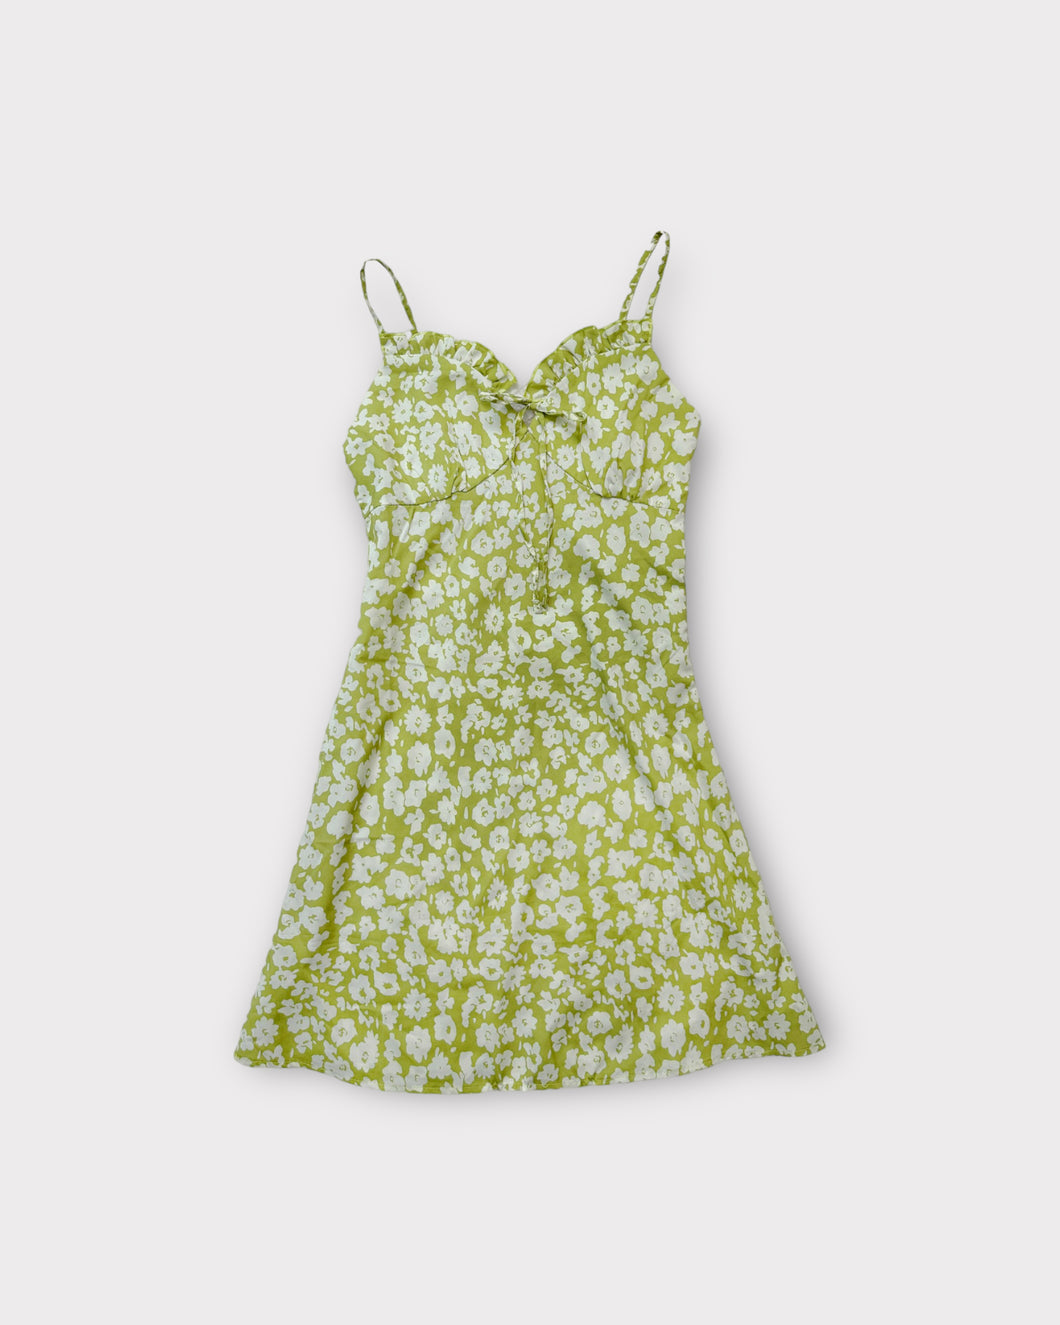 Romi Green Floral Summer Mini Dress (S)